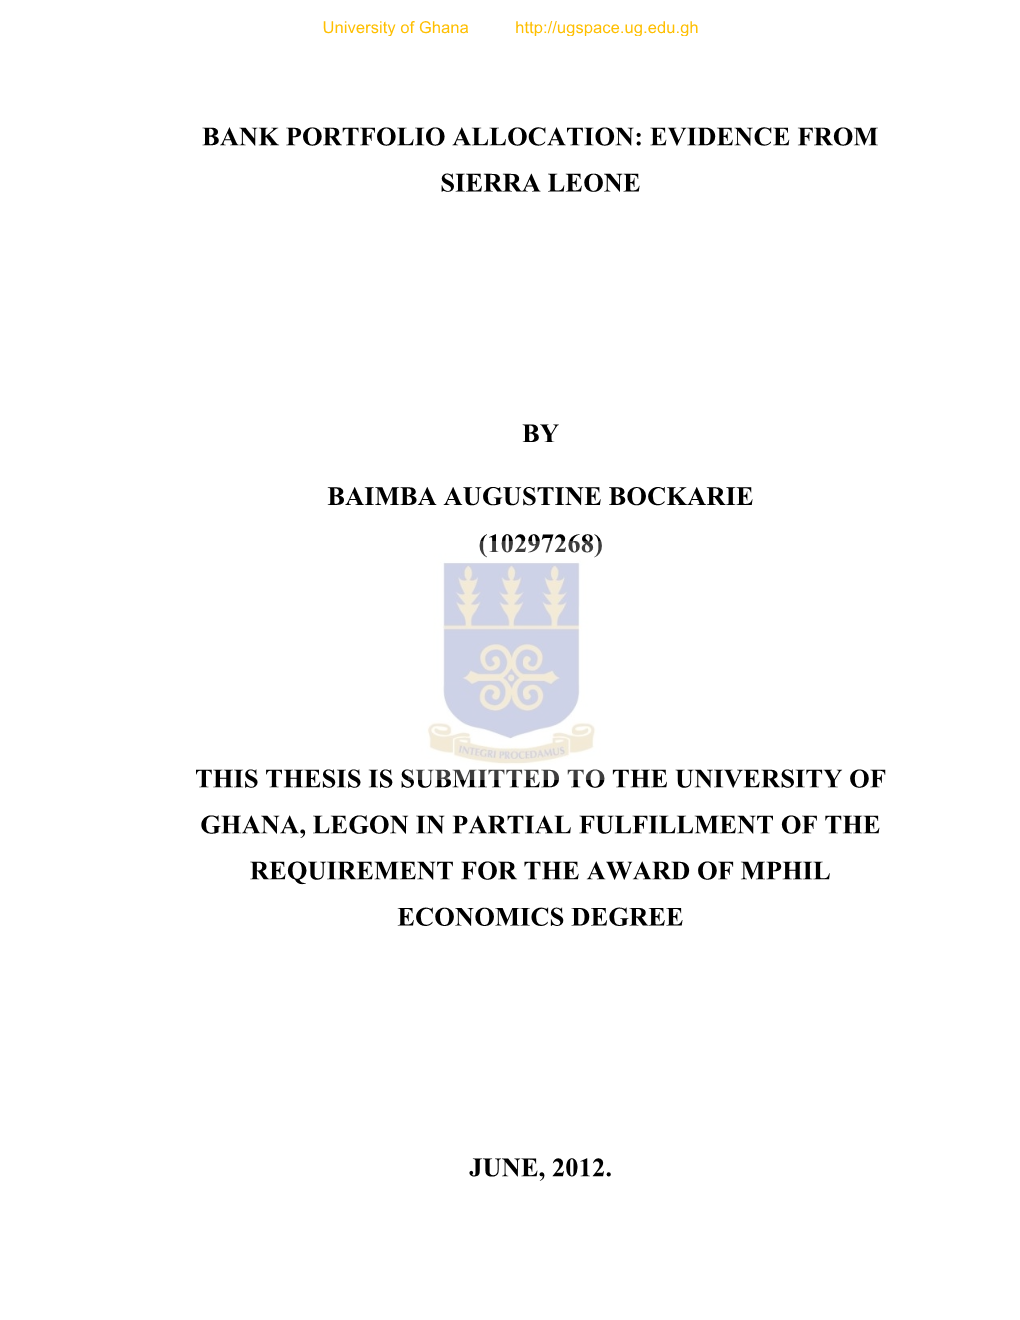 Bank Portfolio Allocation: Evidence from Sierra Leone